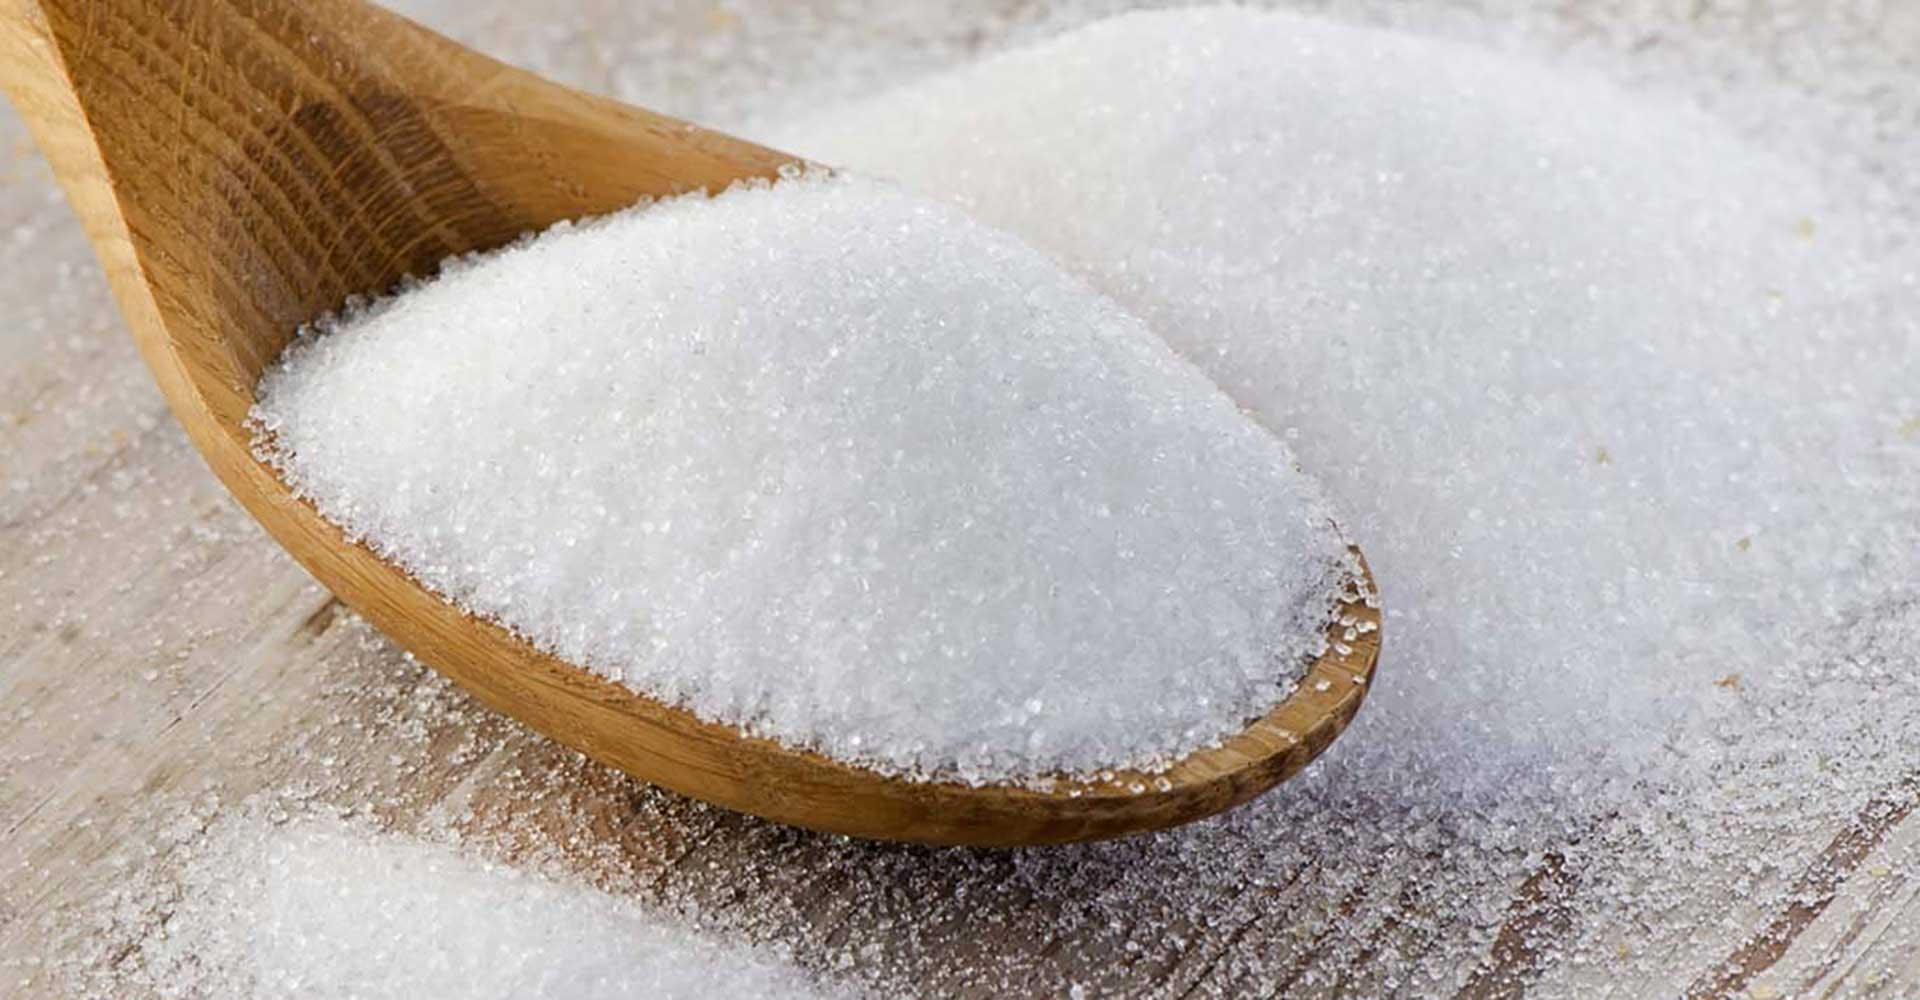 Tελικα η ζαχαρη τρεφει τον καρκινο?